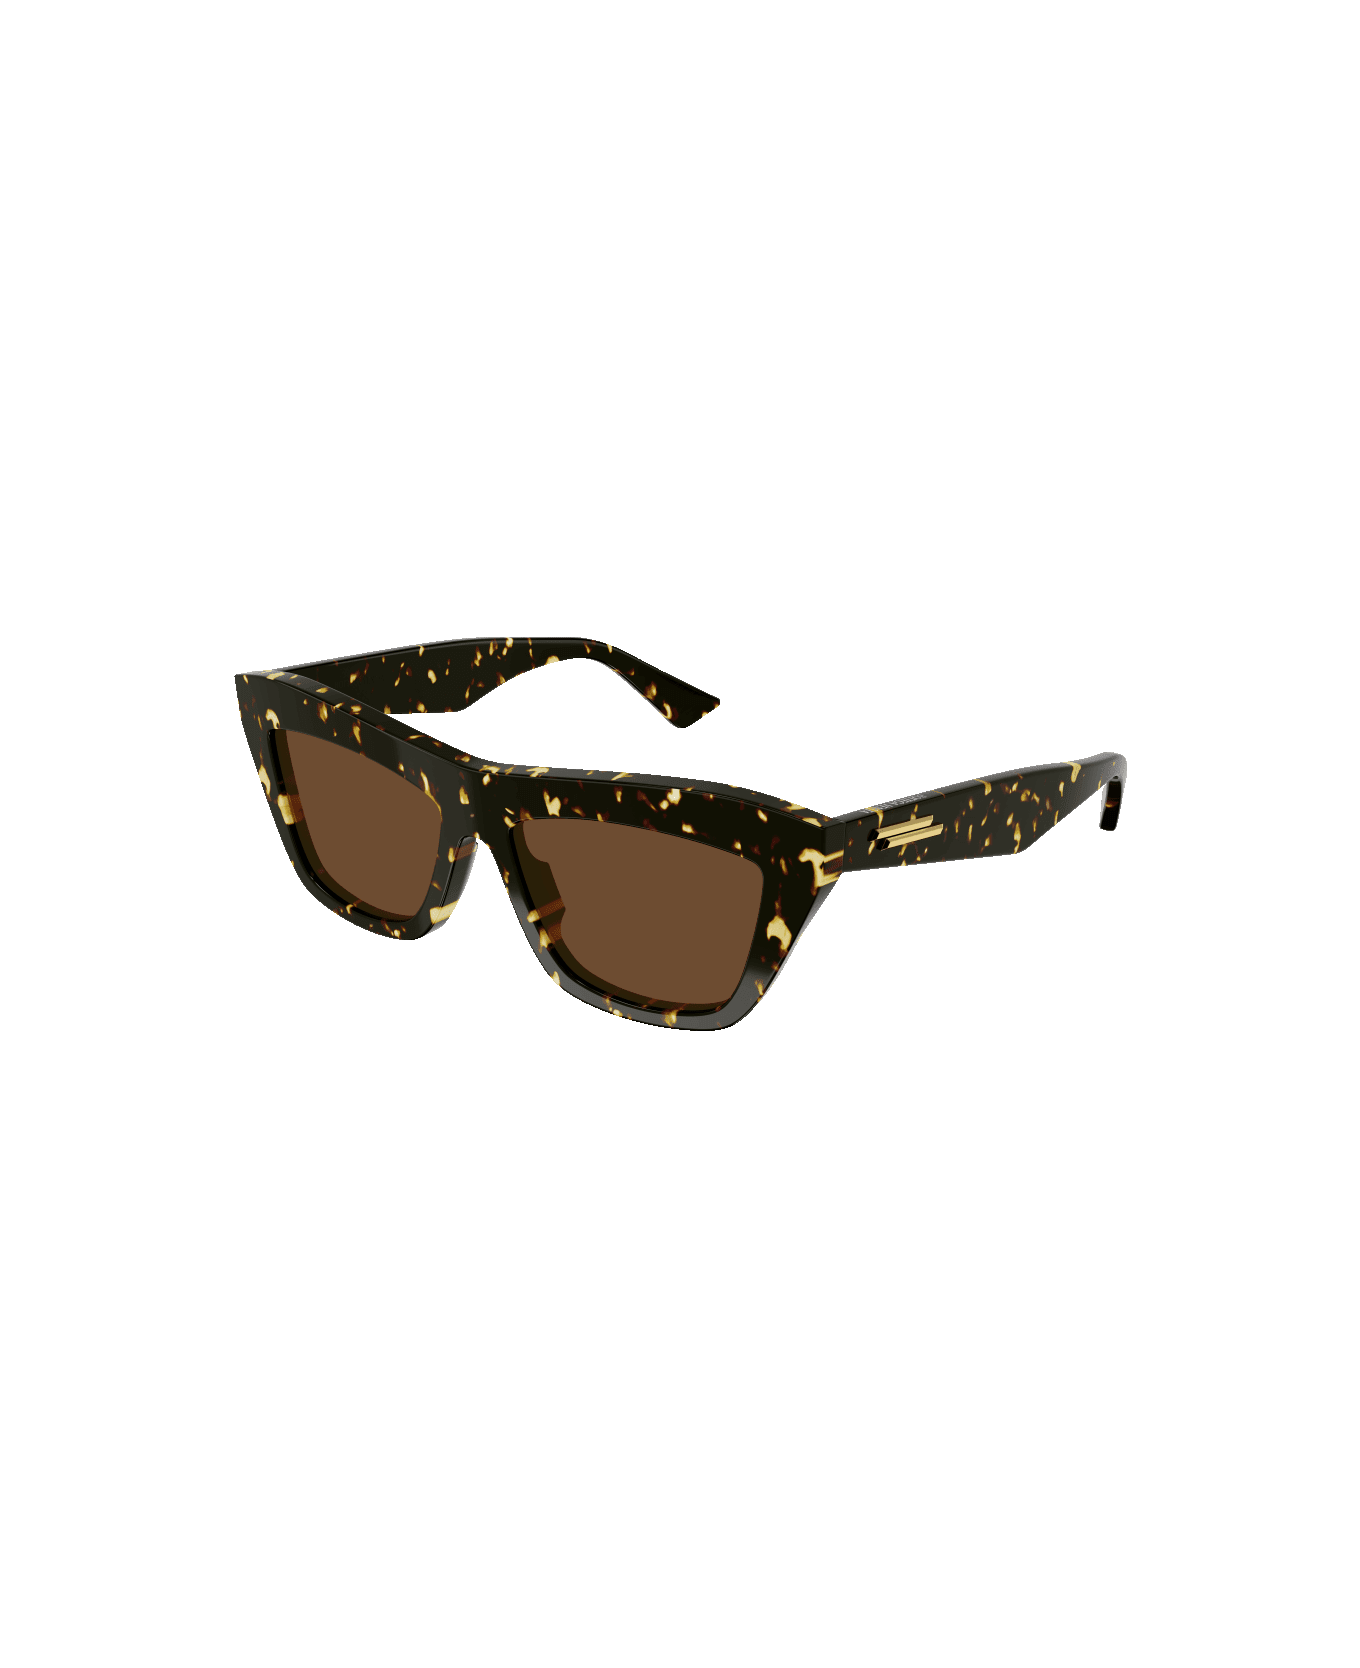 Bottega Veneta Eyewear BV1121S 002 Sunglasses - Tortoise サングラス